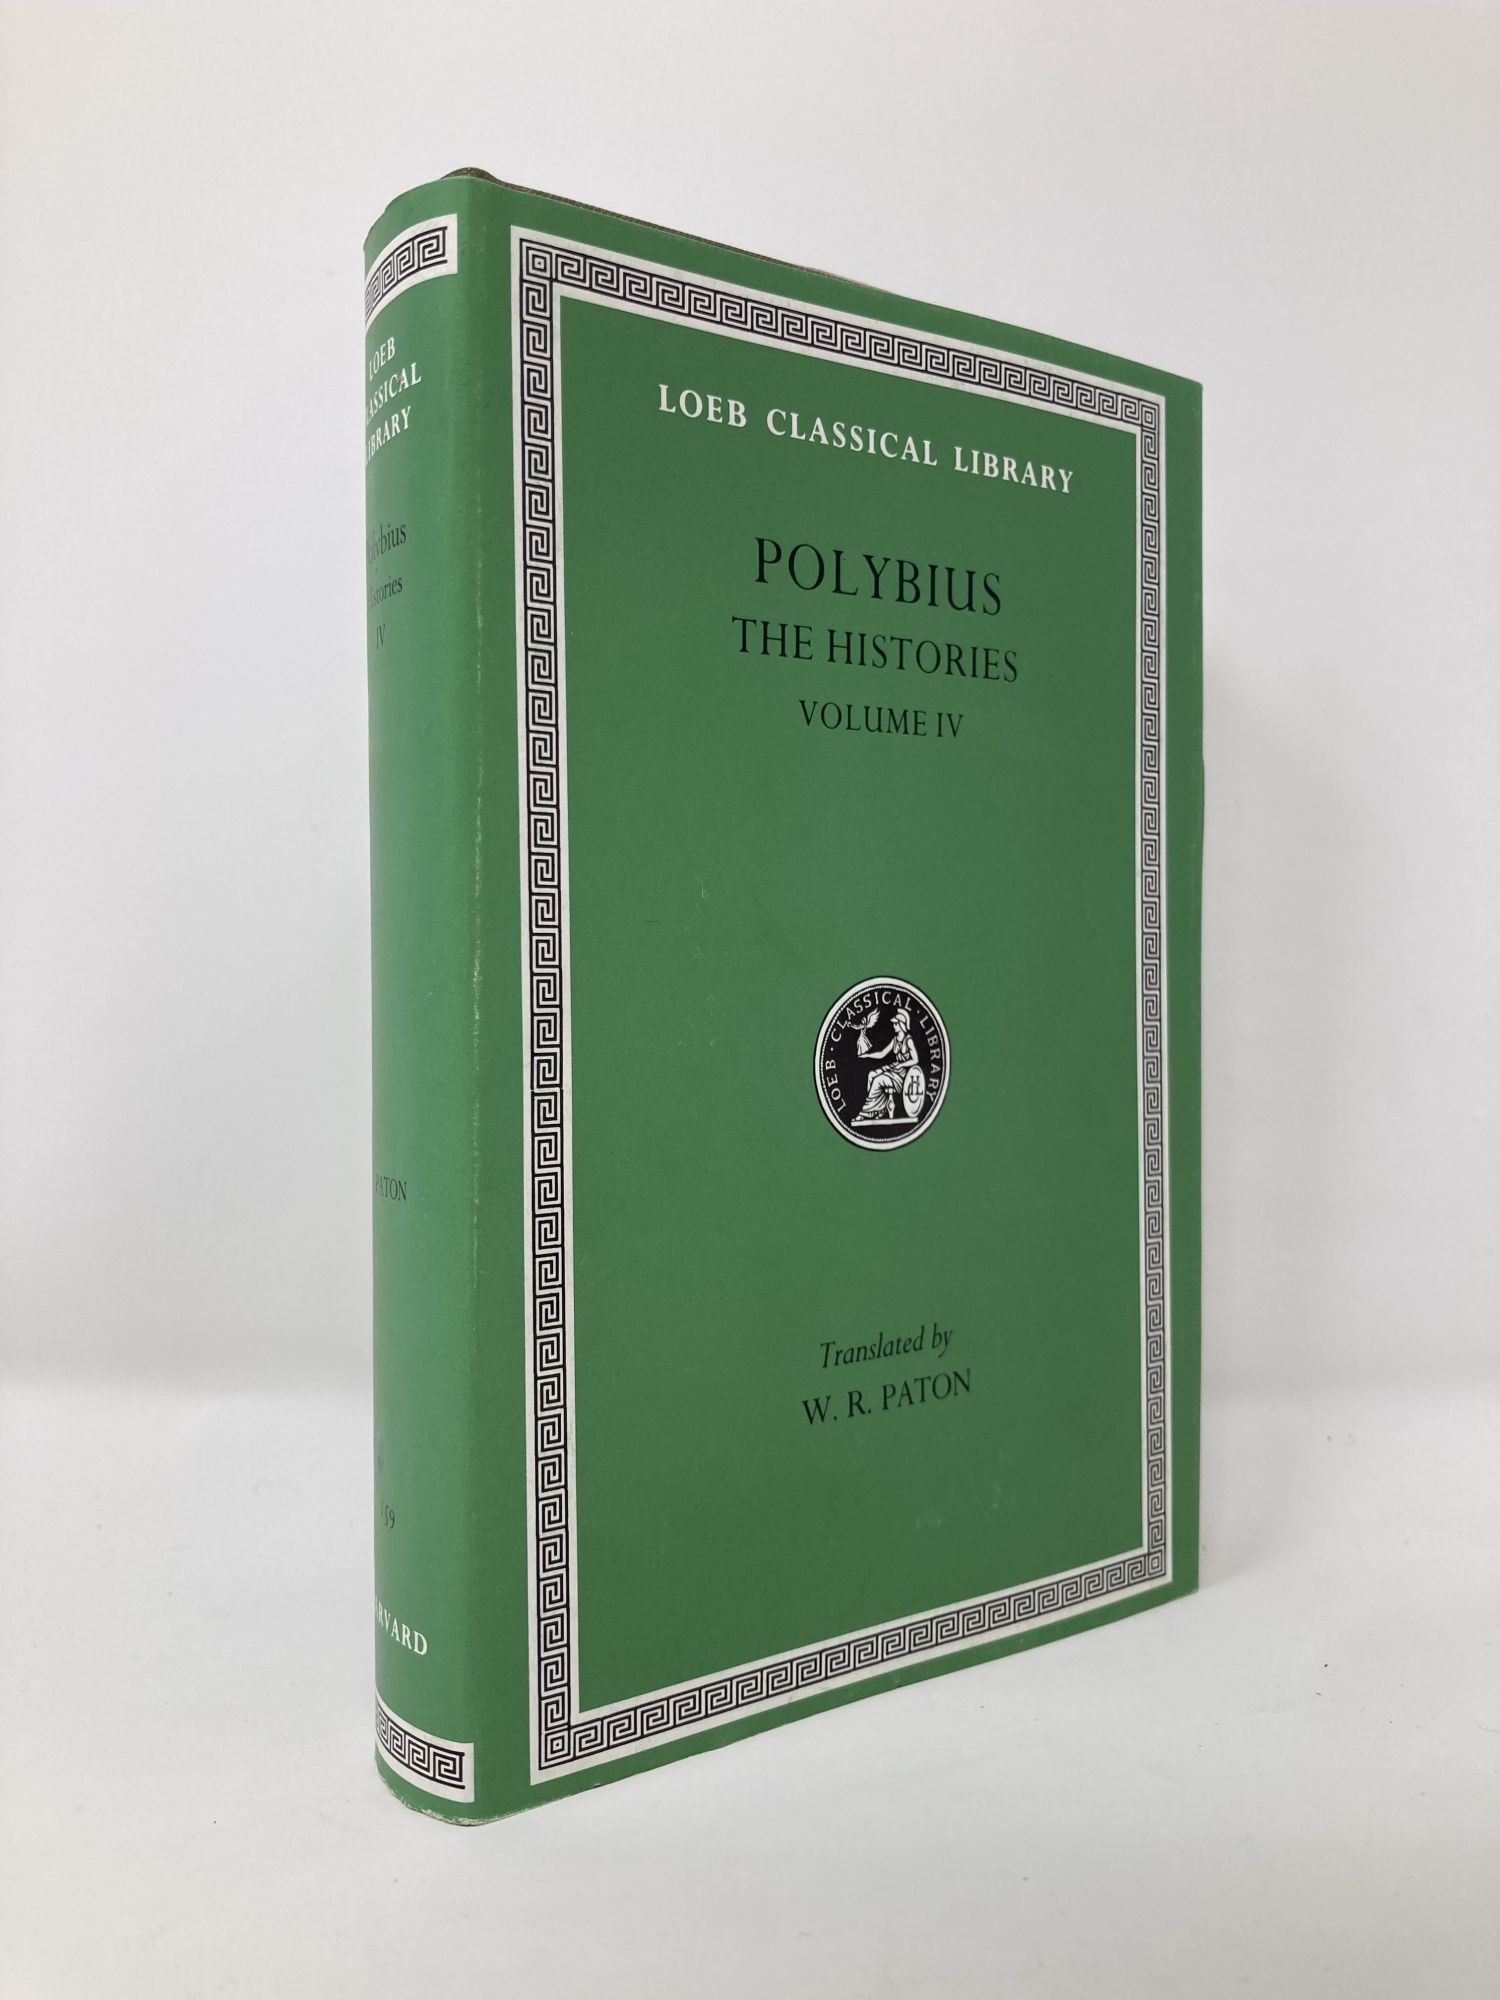 Polybius: The Histories, Vol. IV, Books 9-15 (Loeb Classical Library, No. 159) - Polybius